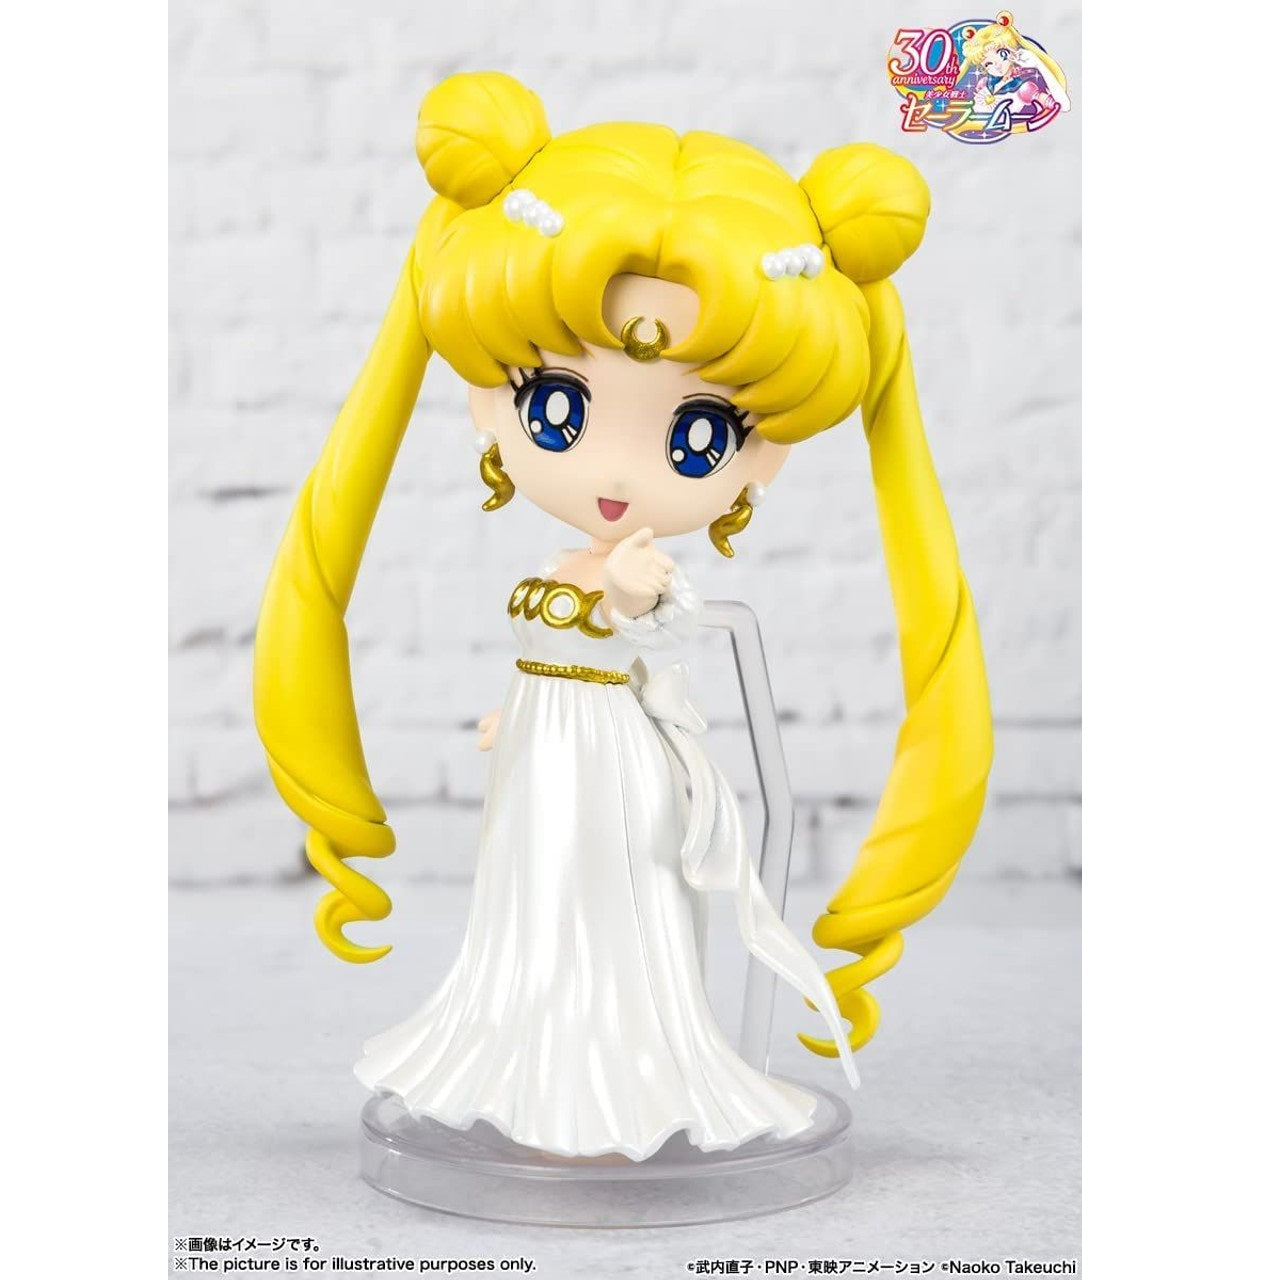 Sailor Moon -Figuarts Mini- "Princess Serenity"-Tamashii-Ace Cards & Collectibles